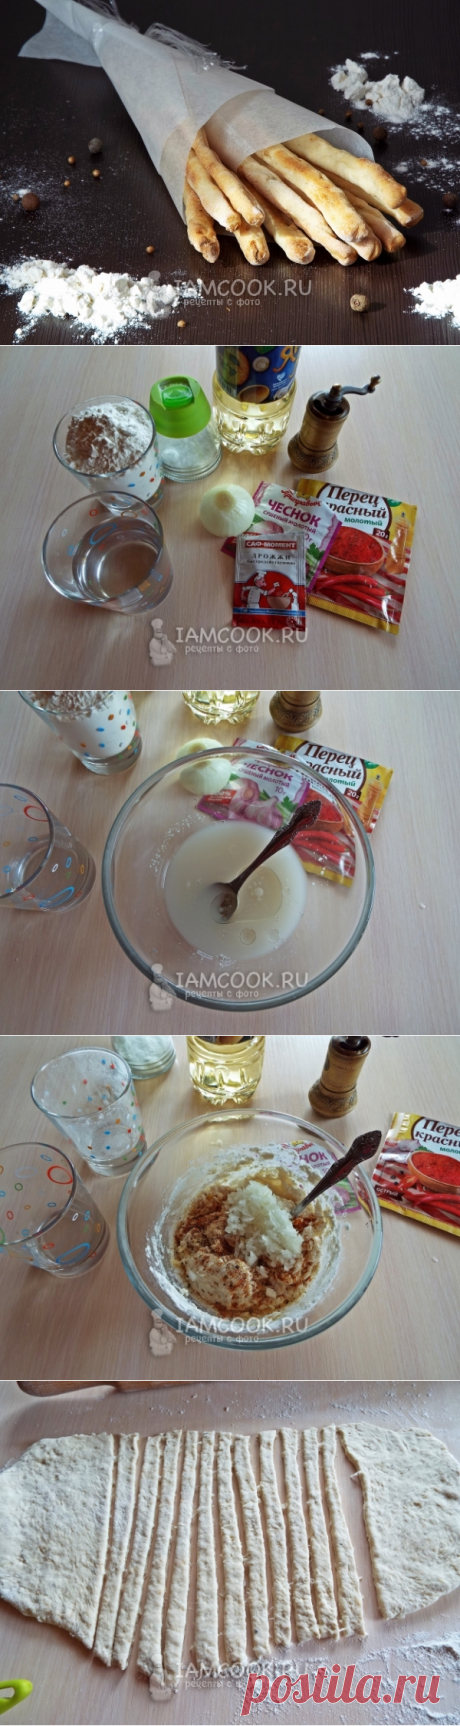 Хлебные палочки с луком — рецепт с фото пошагово